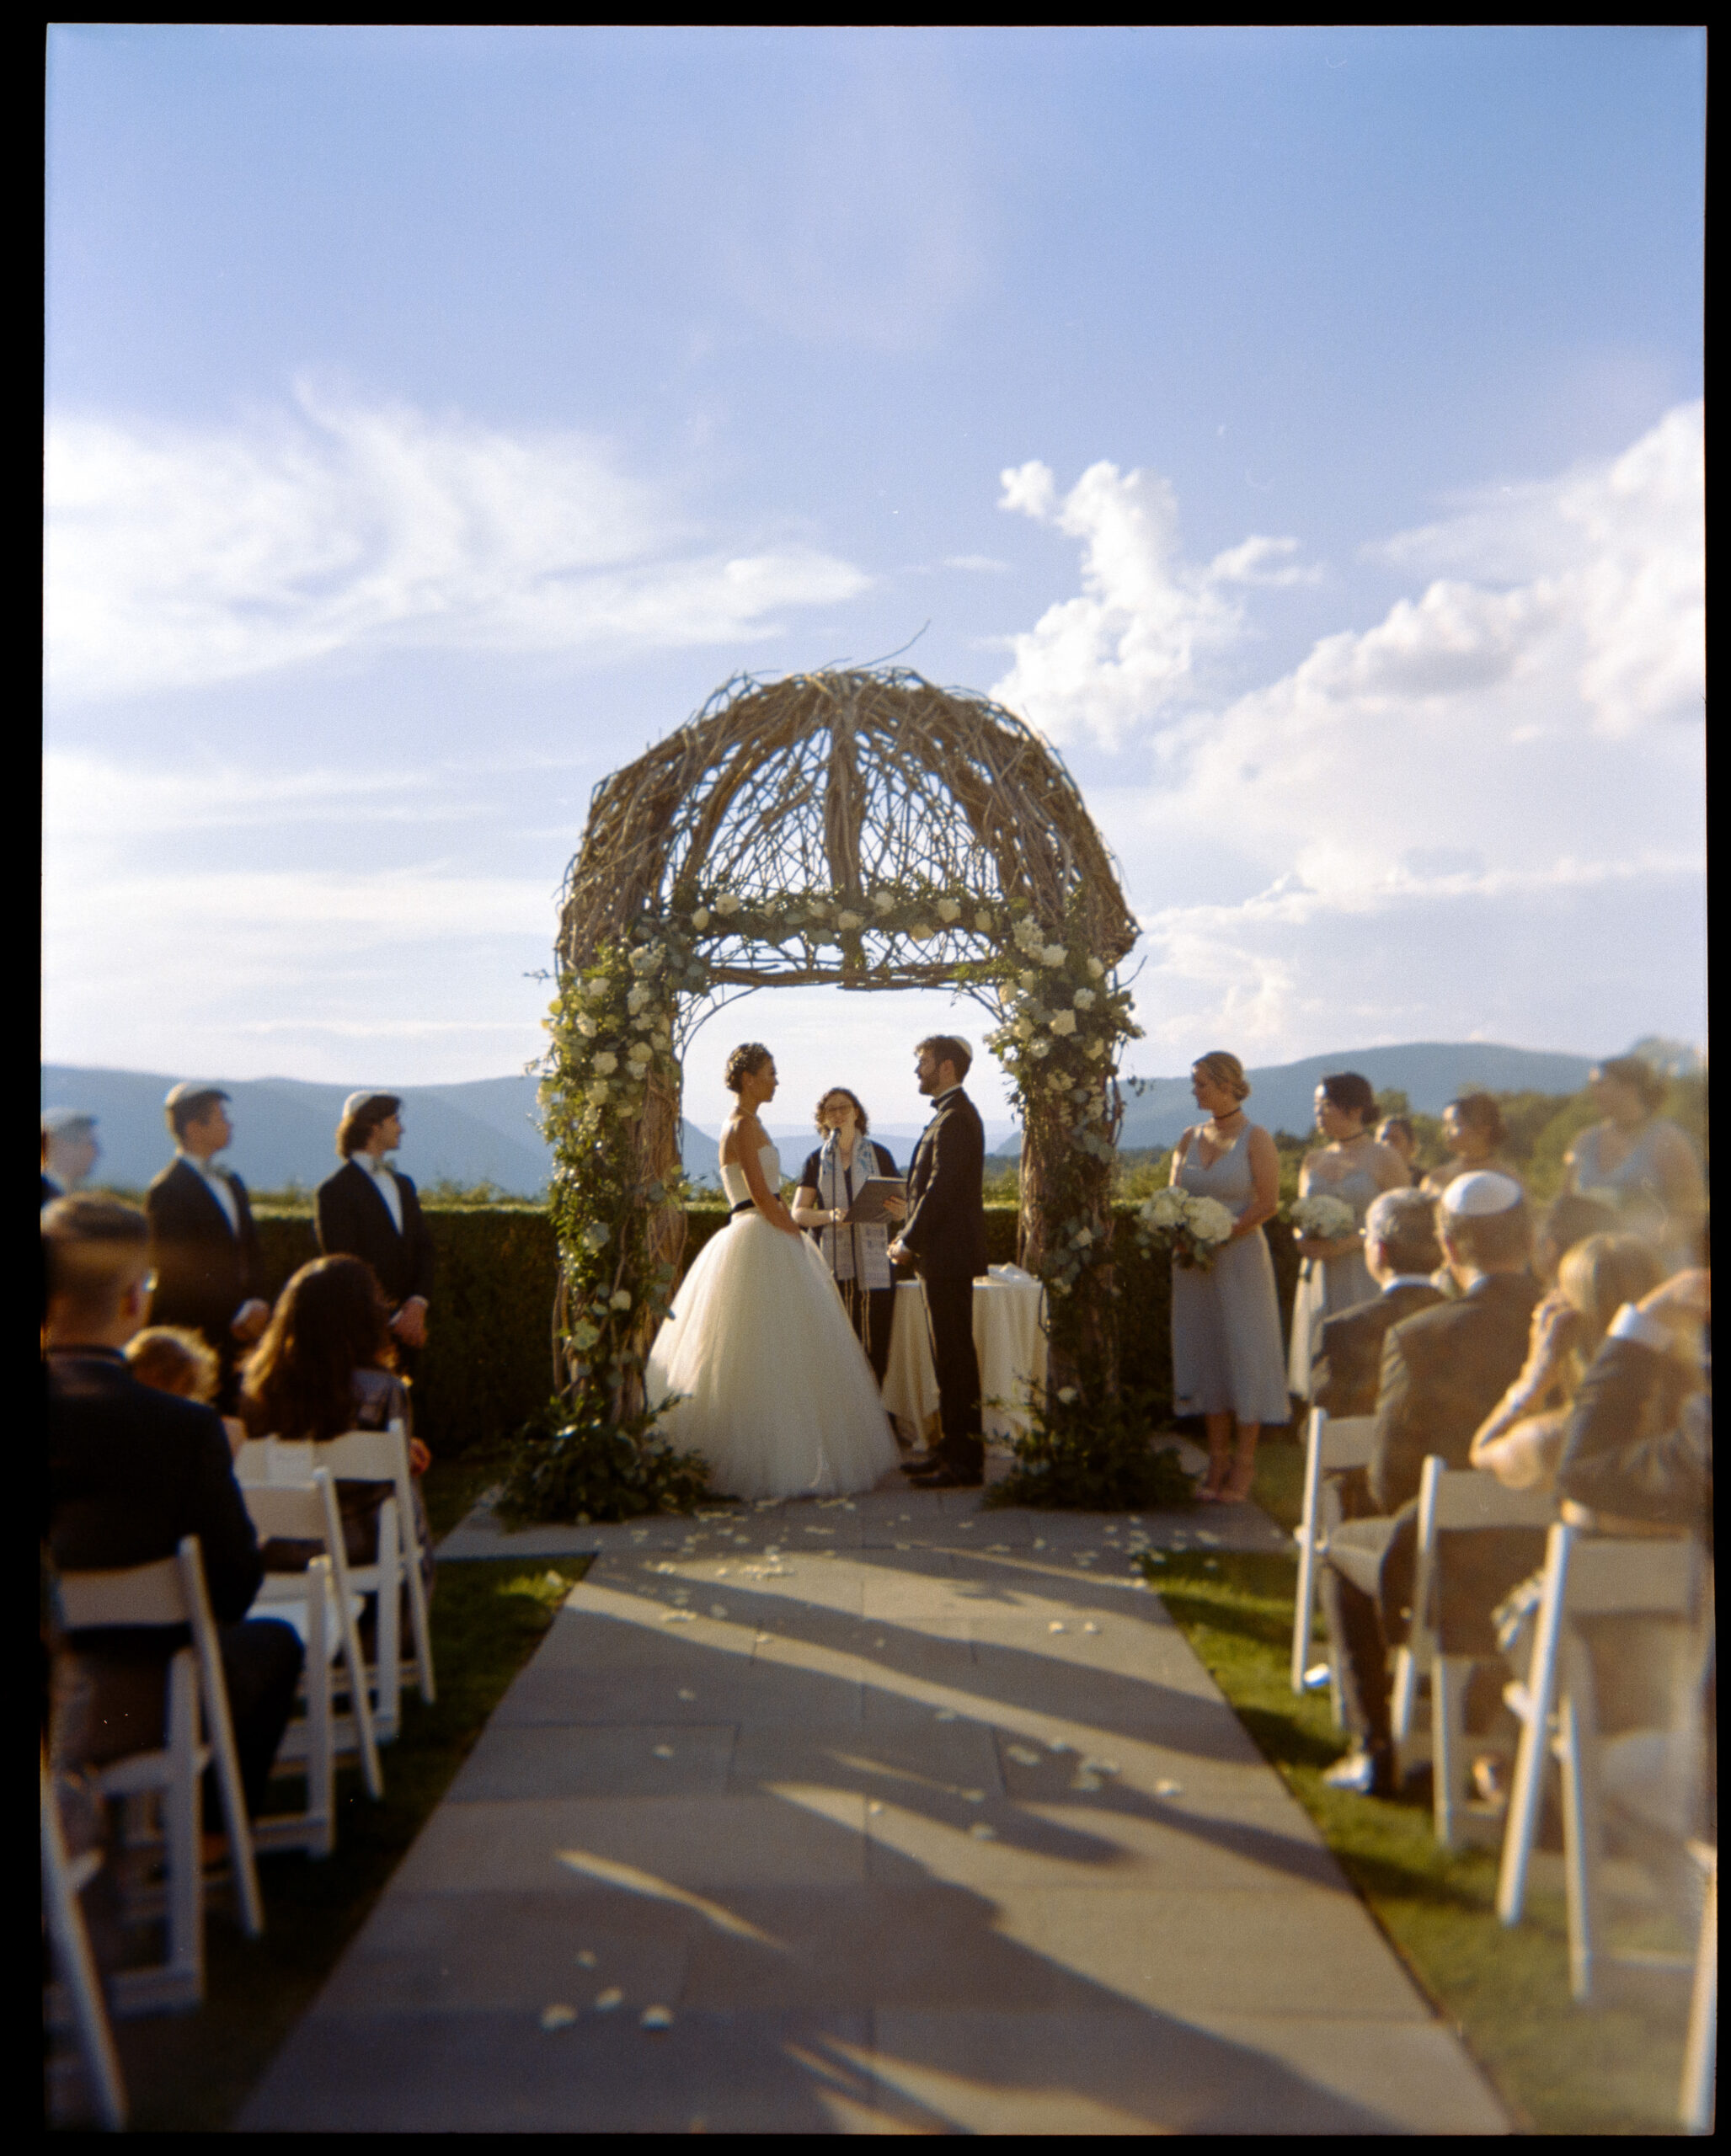 Wedding ceremony image outdoors. Film photography image by Jenny Fu Studio